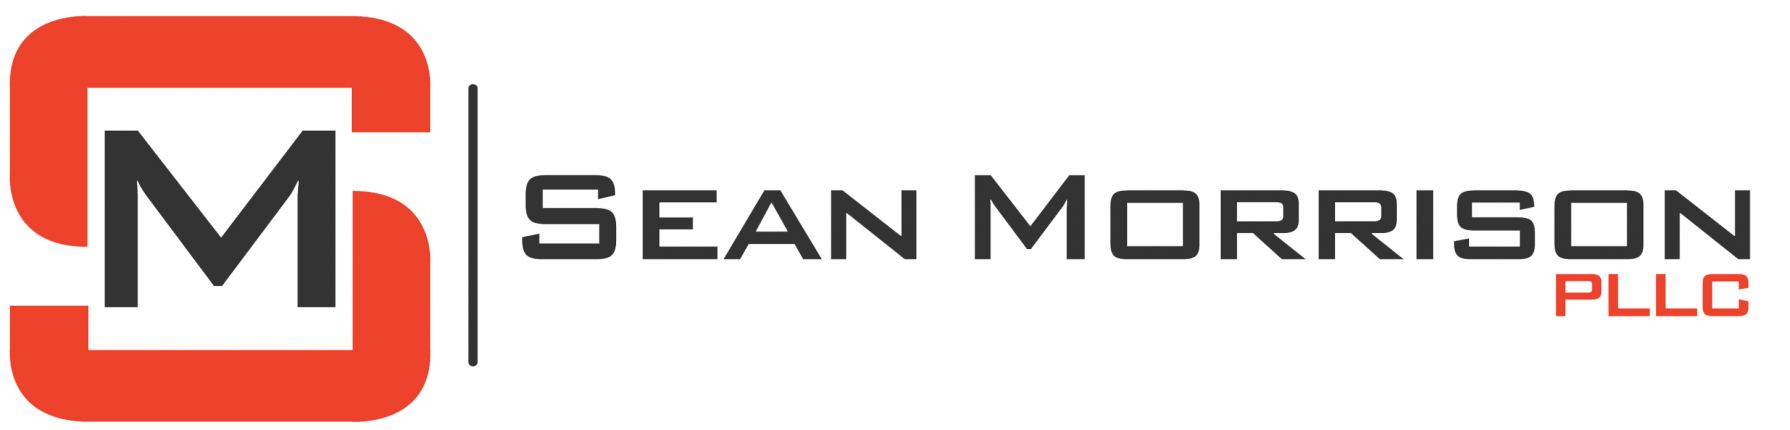 seanmorrisonpllc Logo